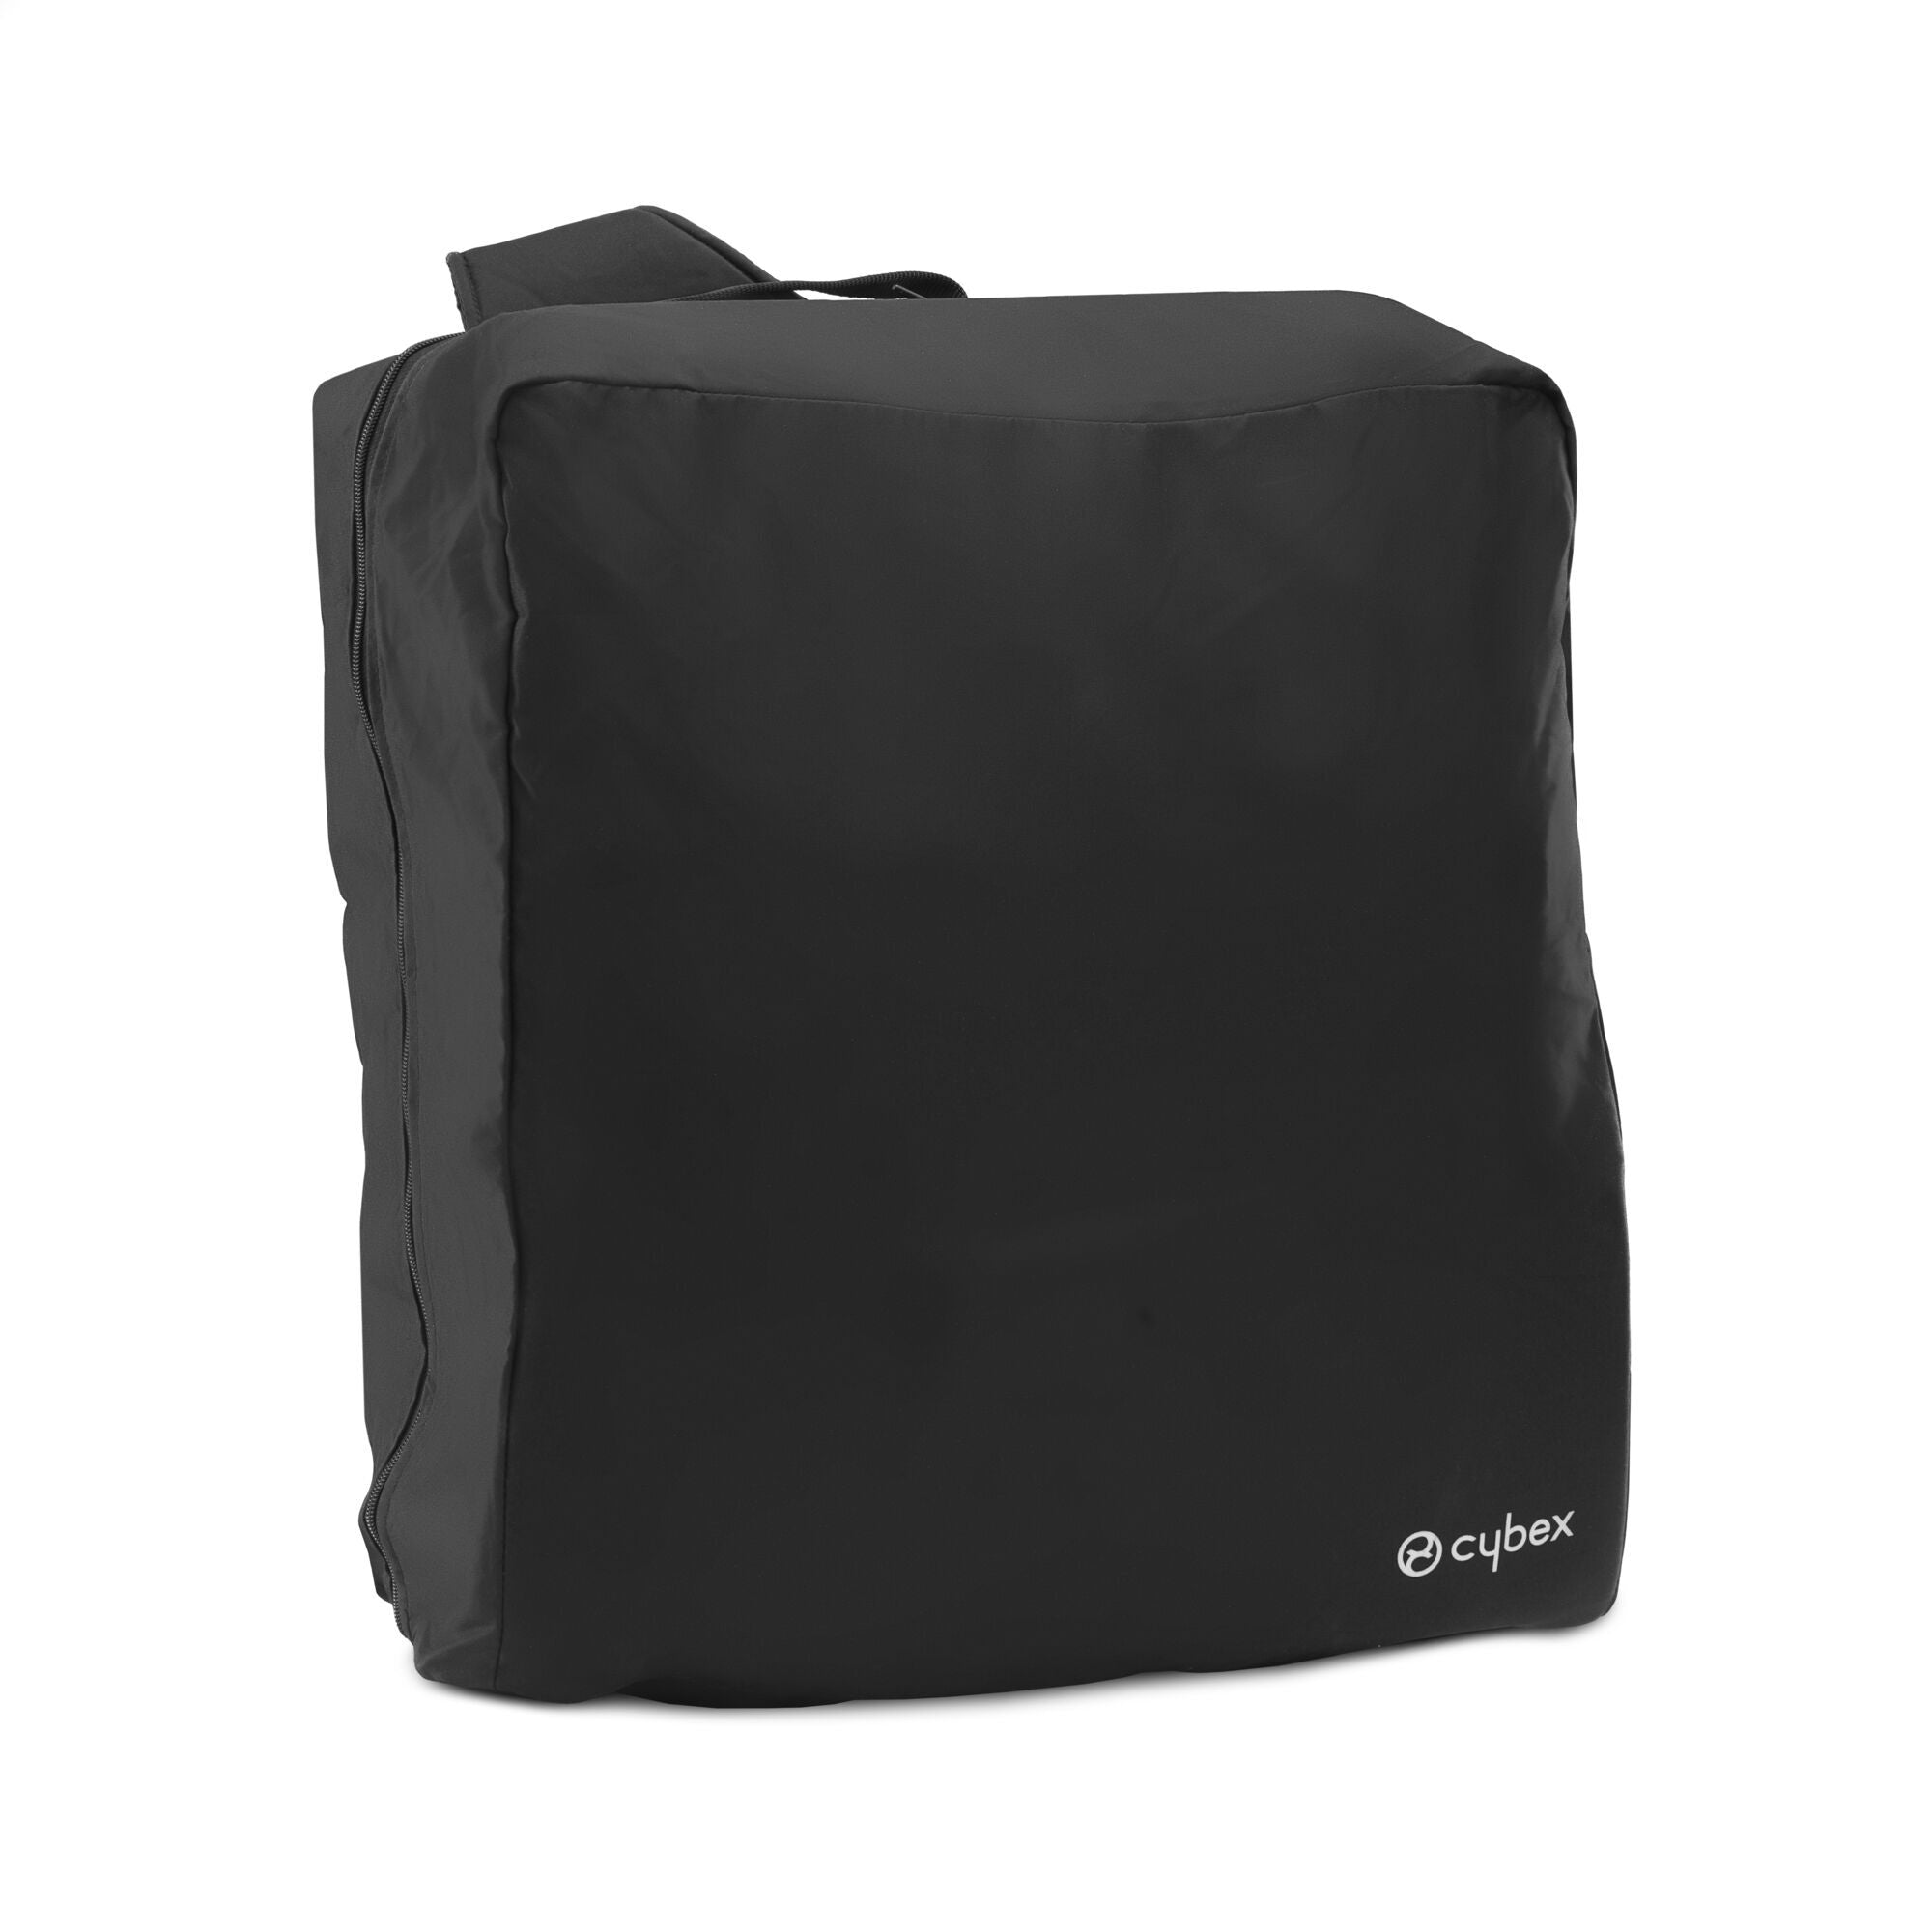 Cybex Travel Bag Travel Bag ORFEO / BEEZY / EEZY S